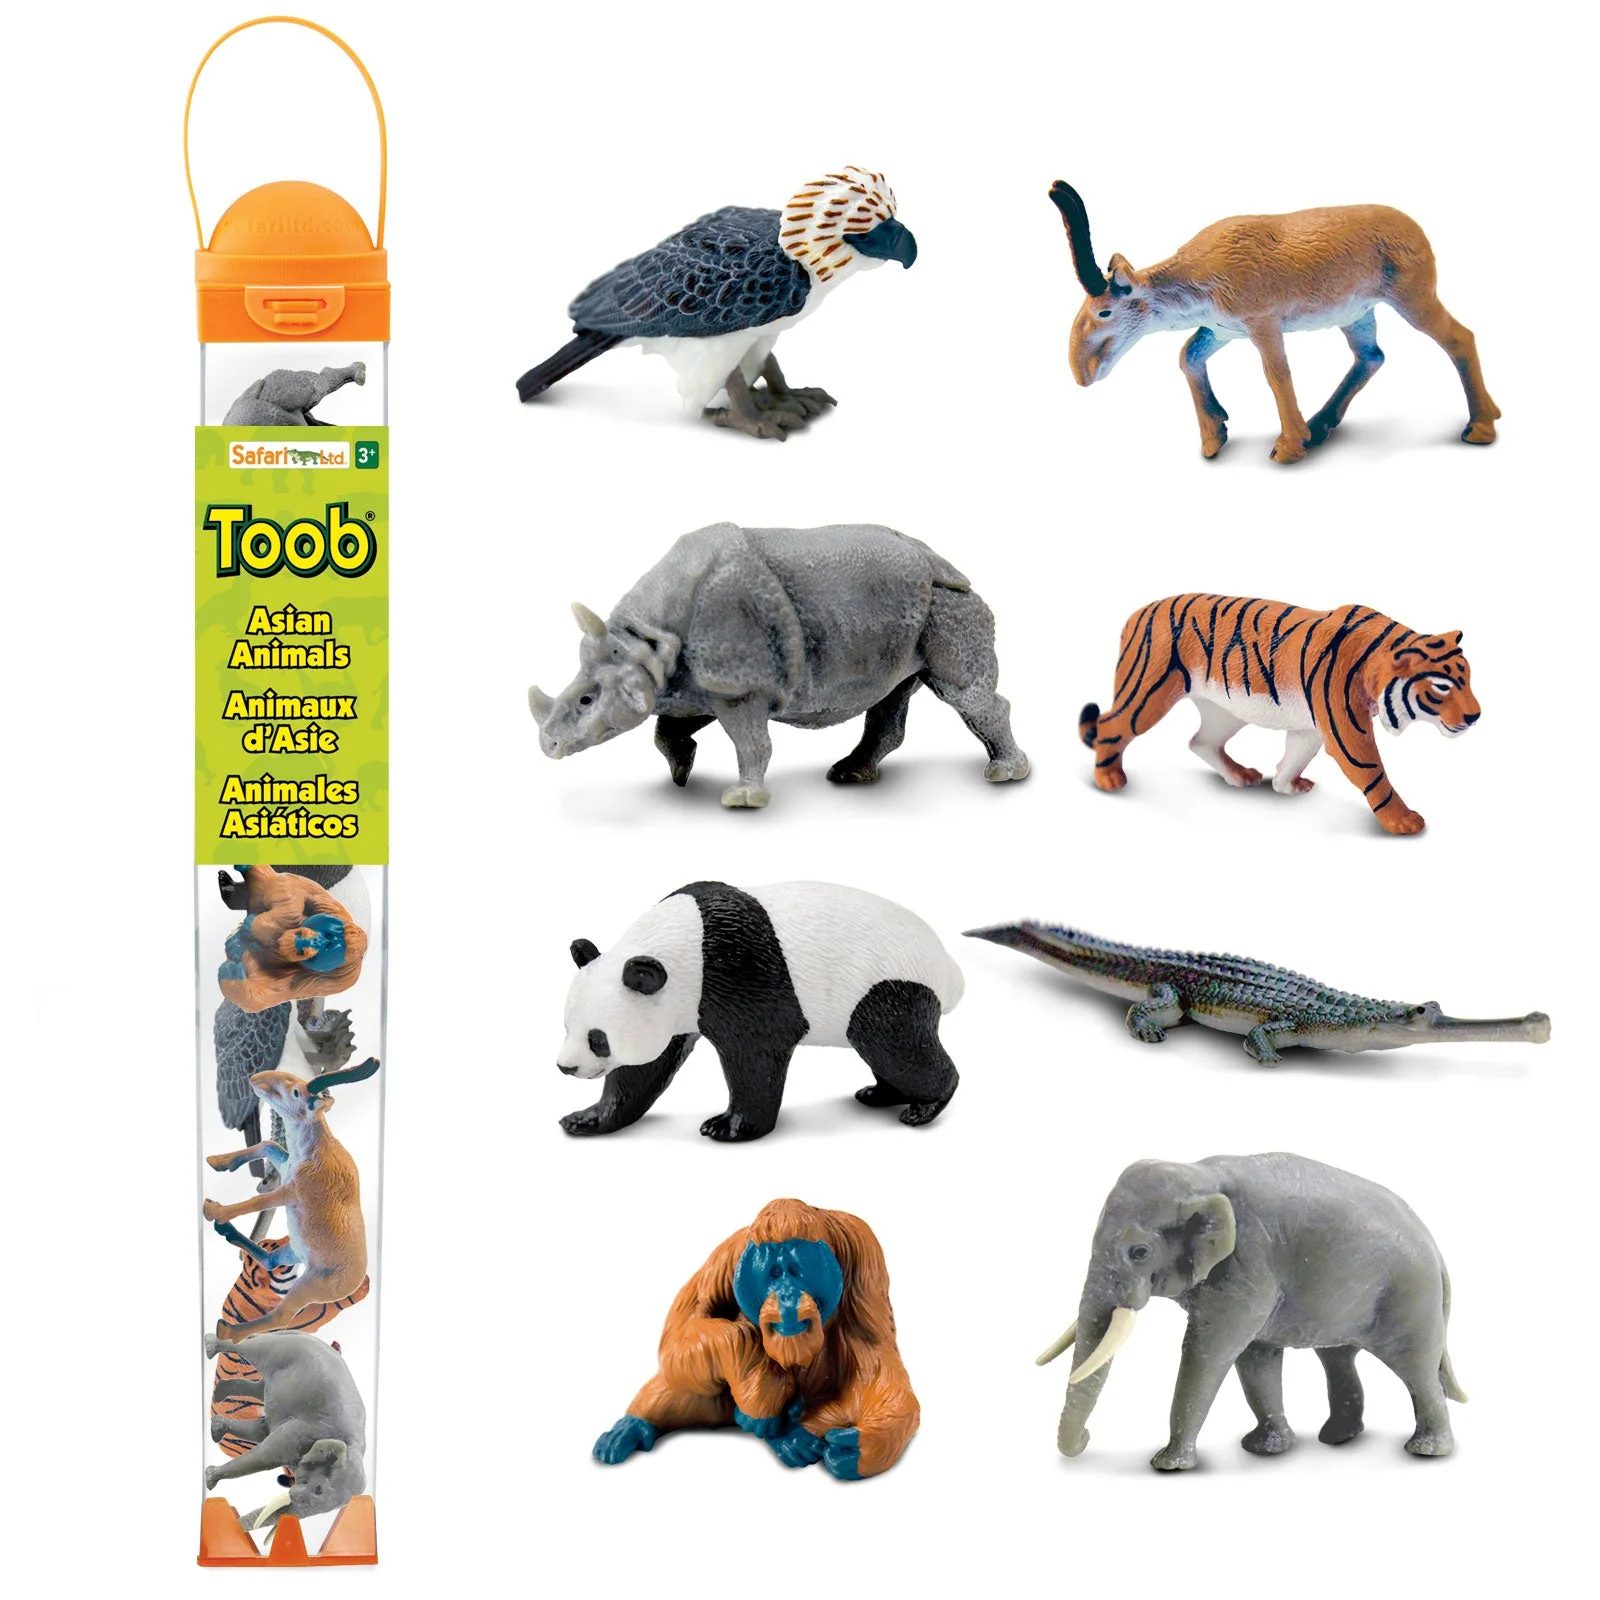 Tub figurine - Asian Animals | Safari